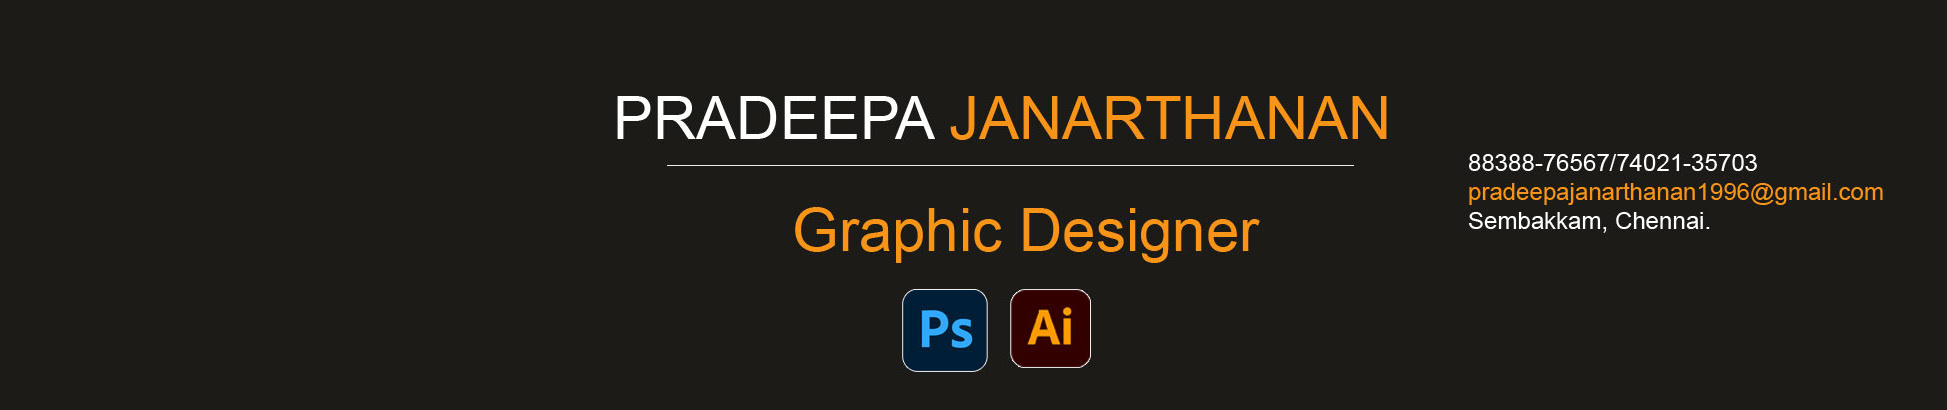 Pradeepa Janarthanan's profile banner